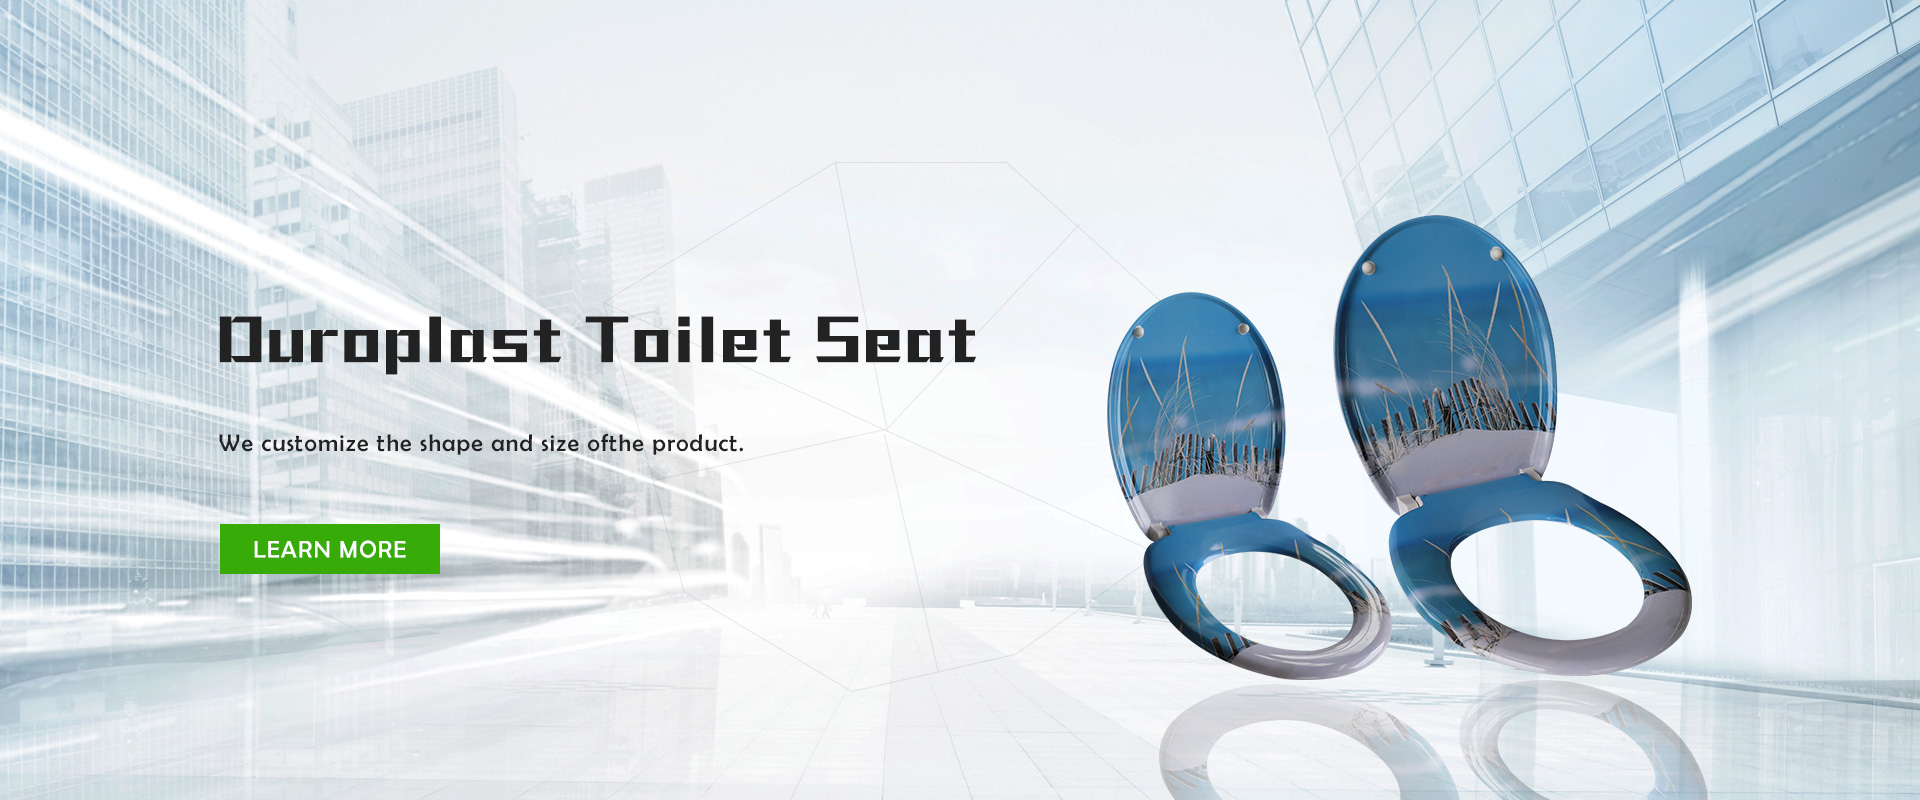 Duroplast शौचालय सीट